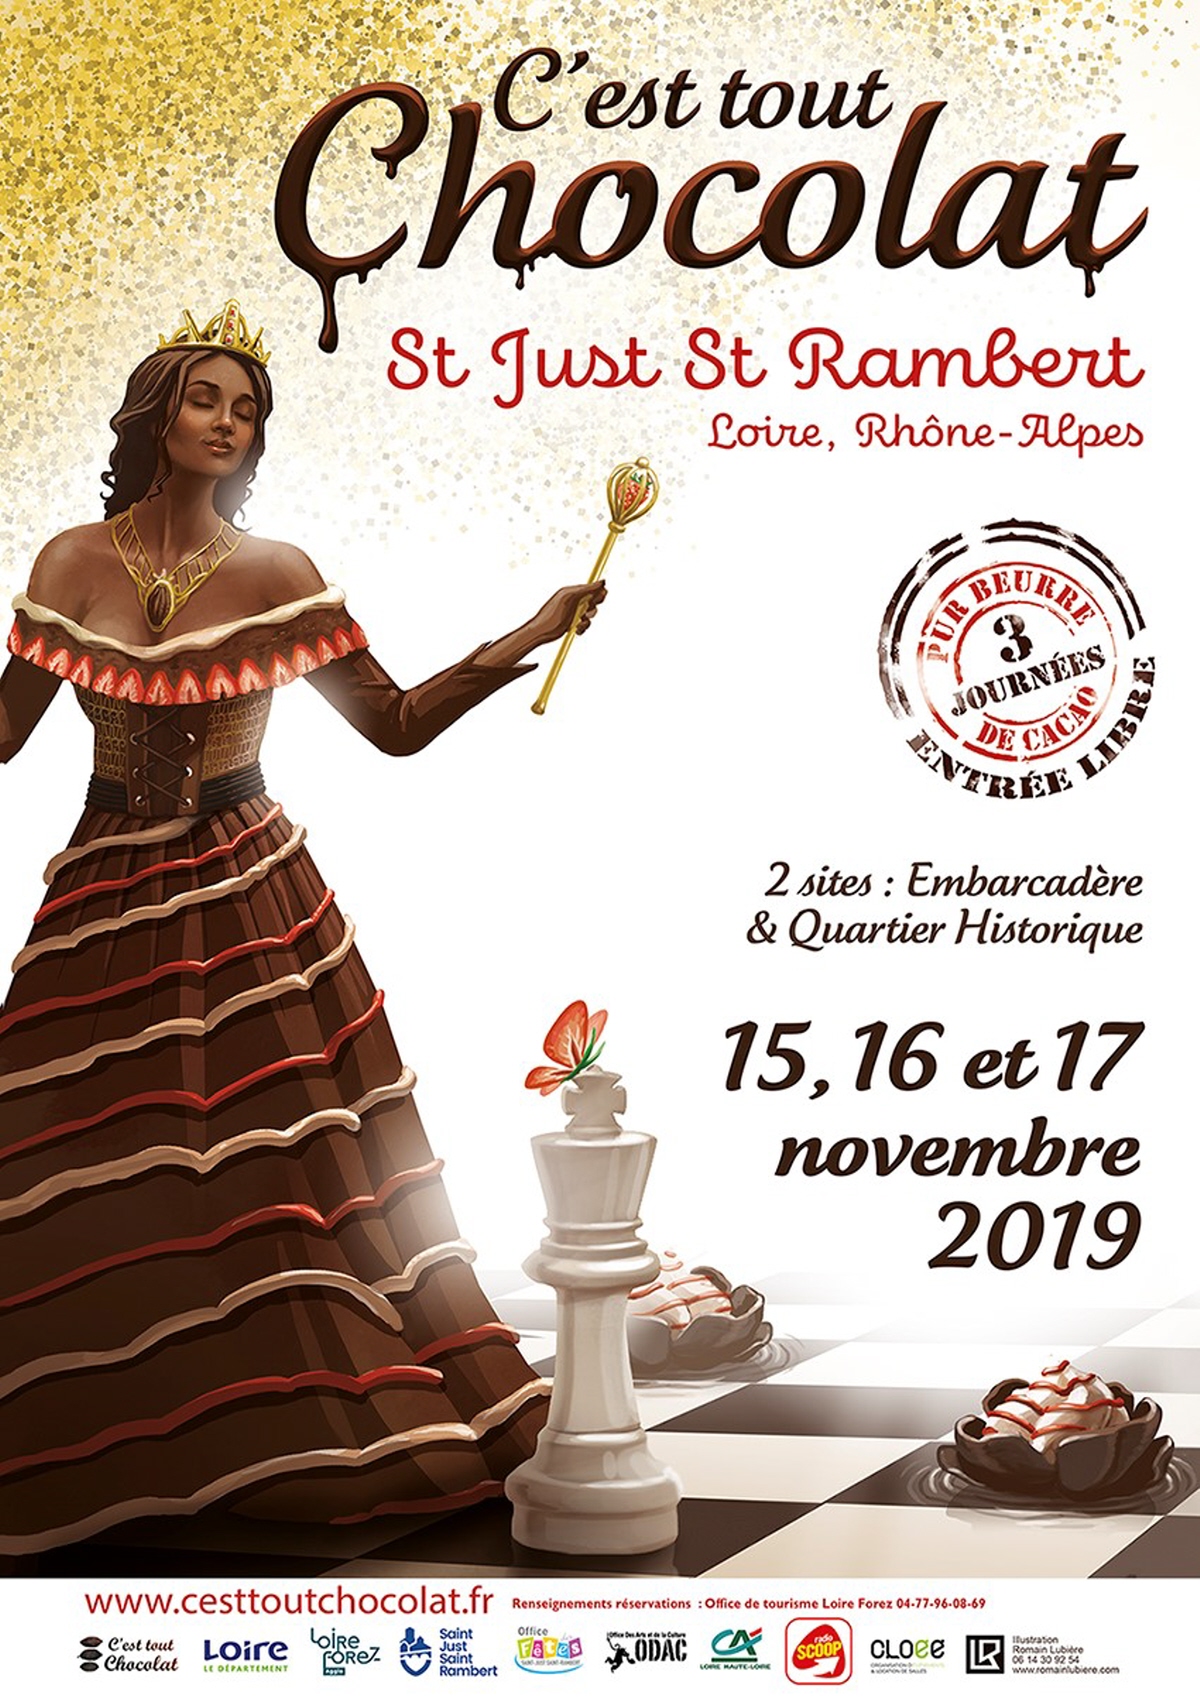 Salon c'est tout chocolat Saint Just Saint Rambert 2019